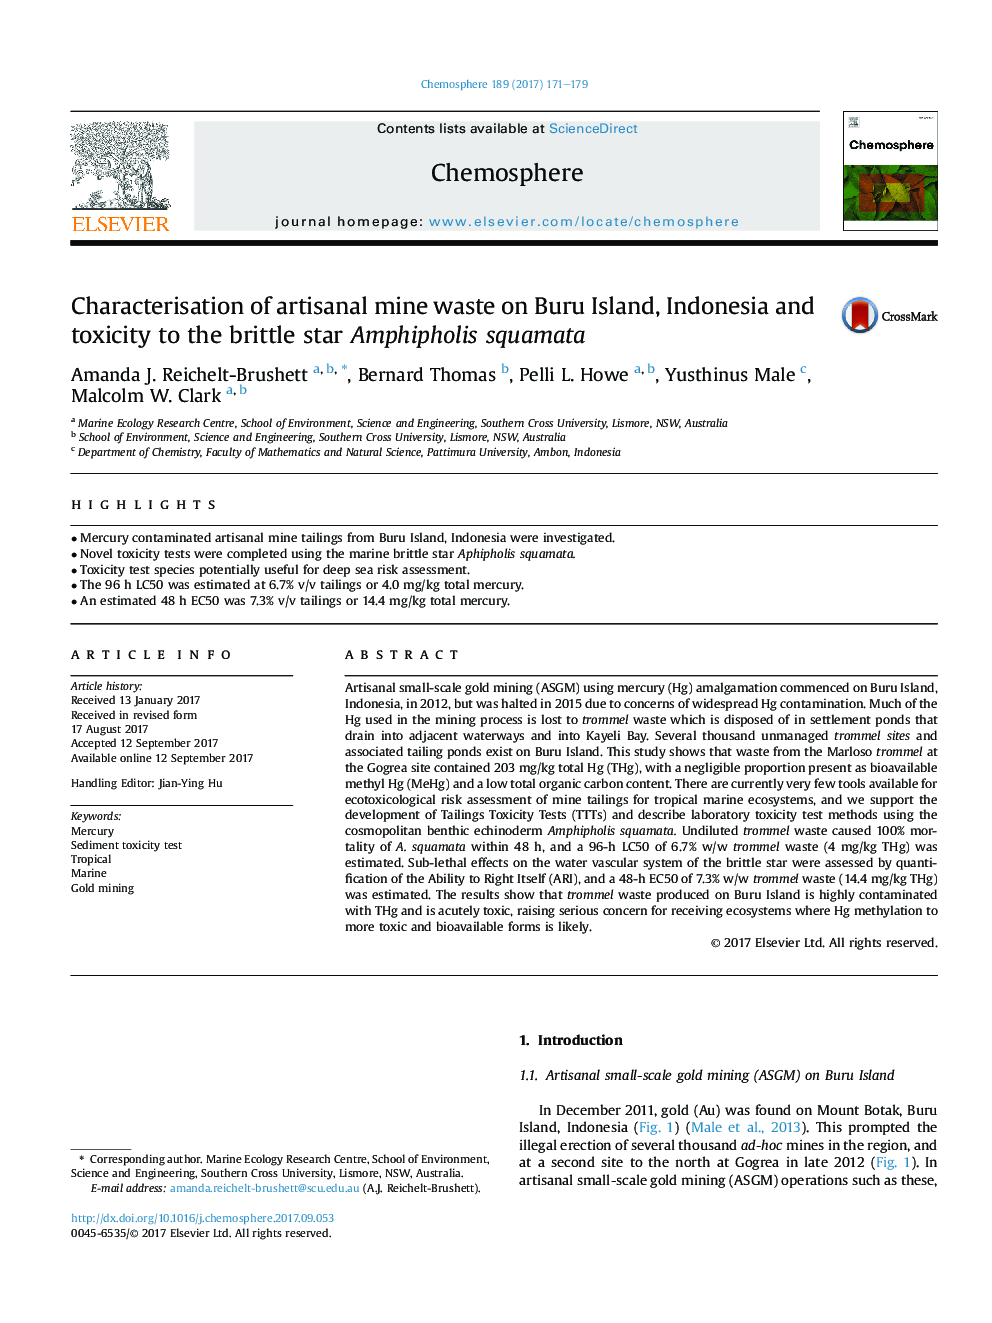 Characterisation of artisanal mine waste on Buru Island, Indonesia and toxicity to the brittle star Amphipholis squamata